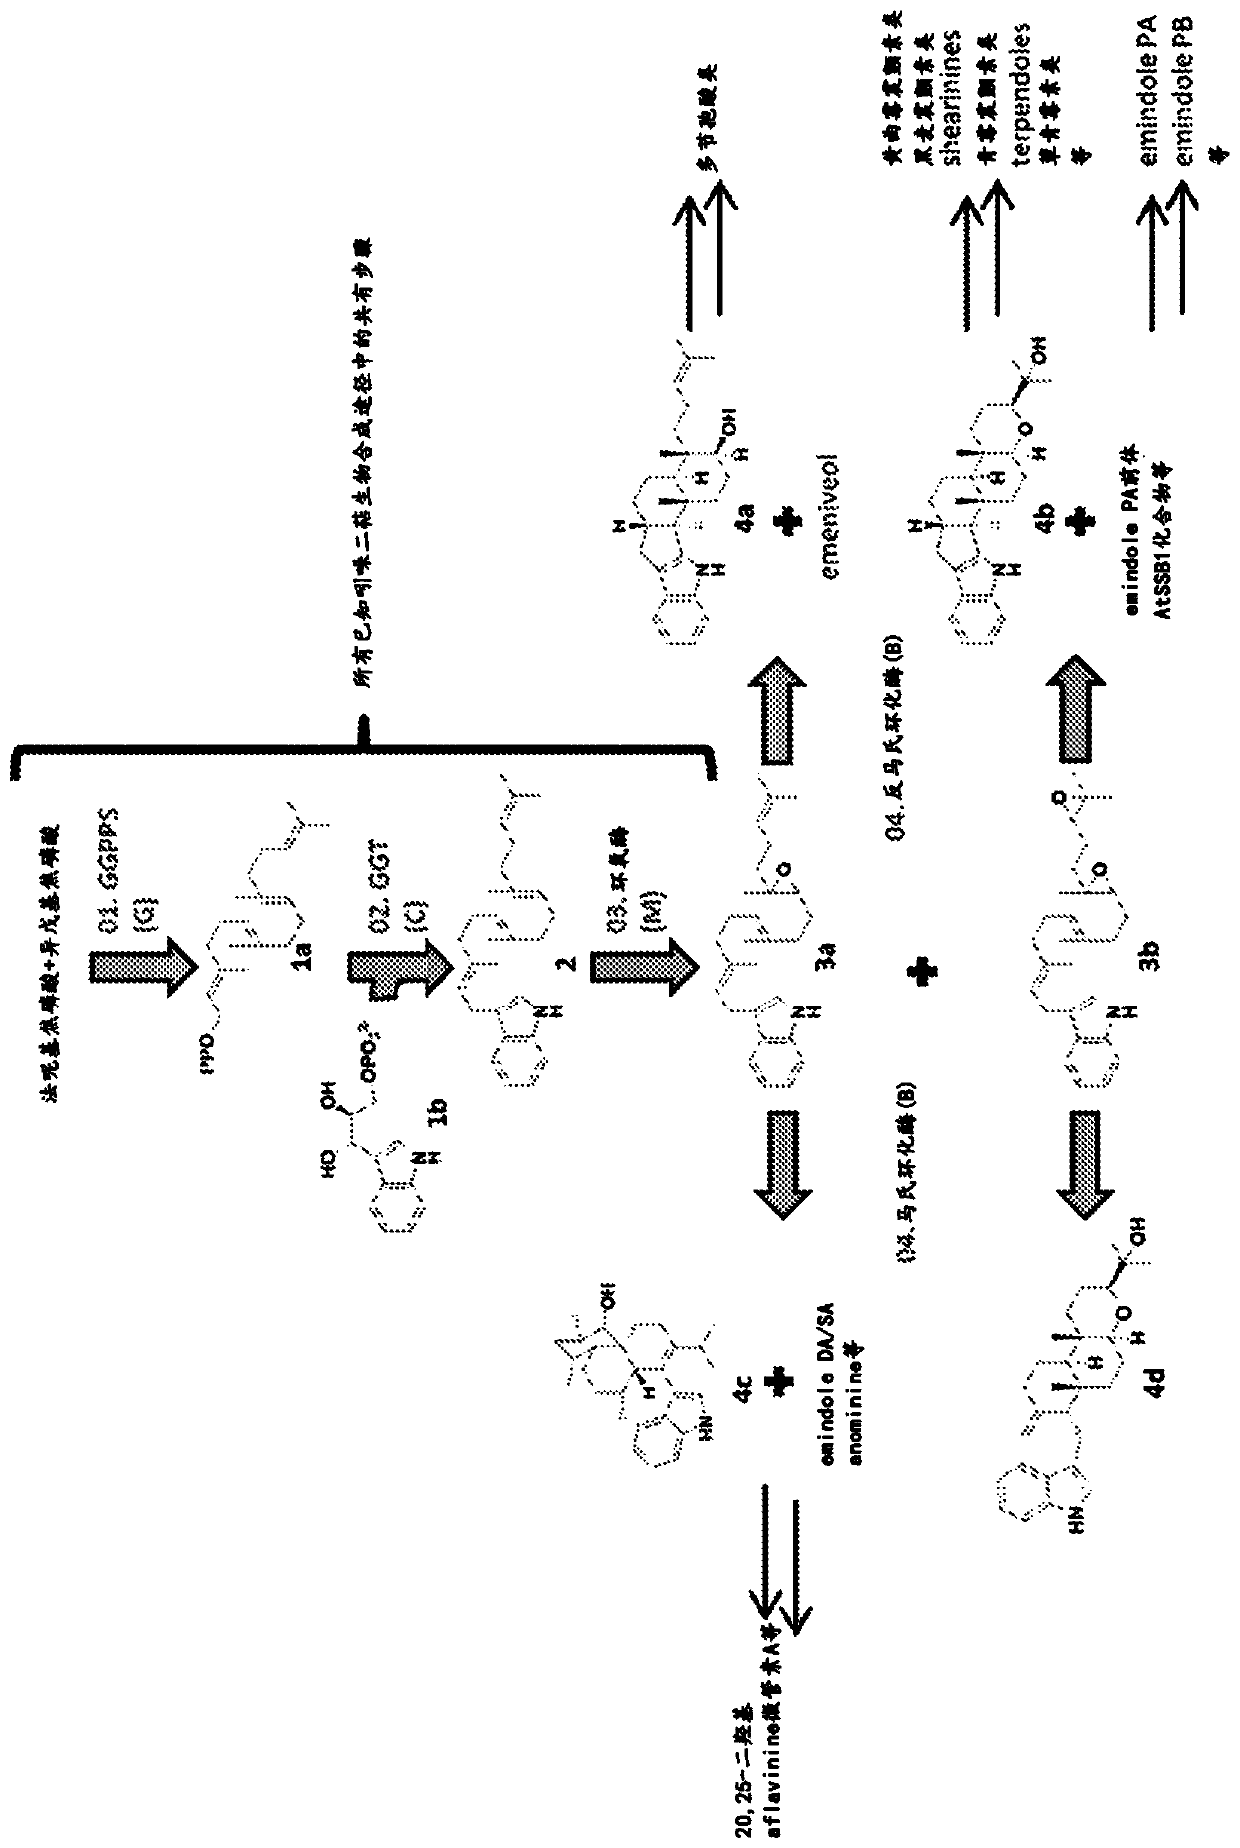 Heterologous biosynthesis of nodulisporic acid